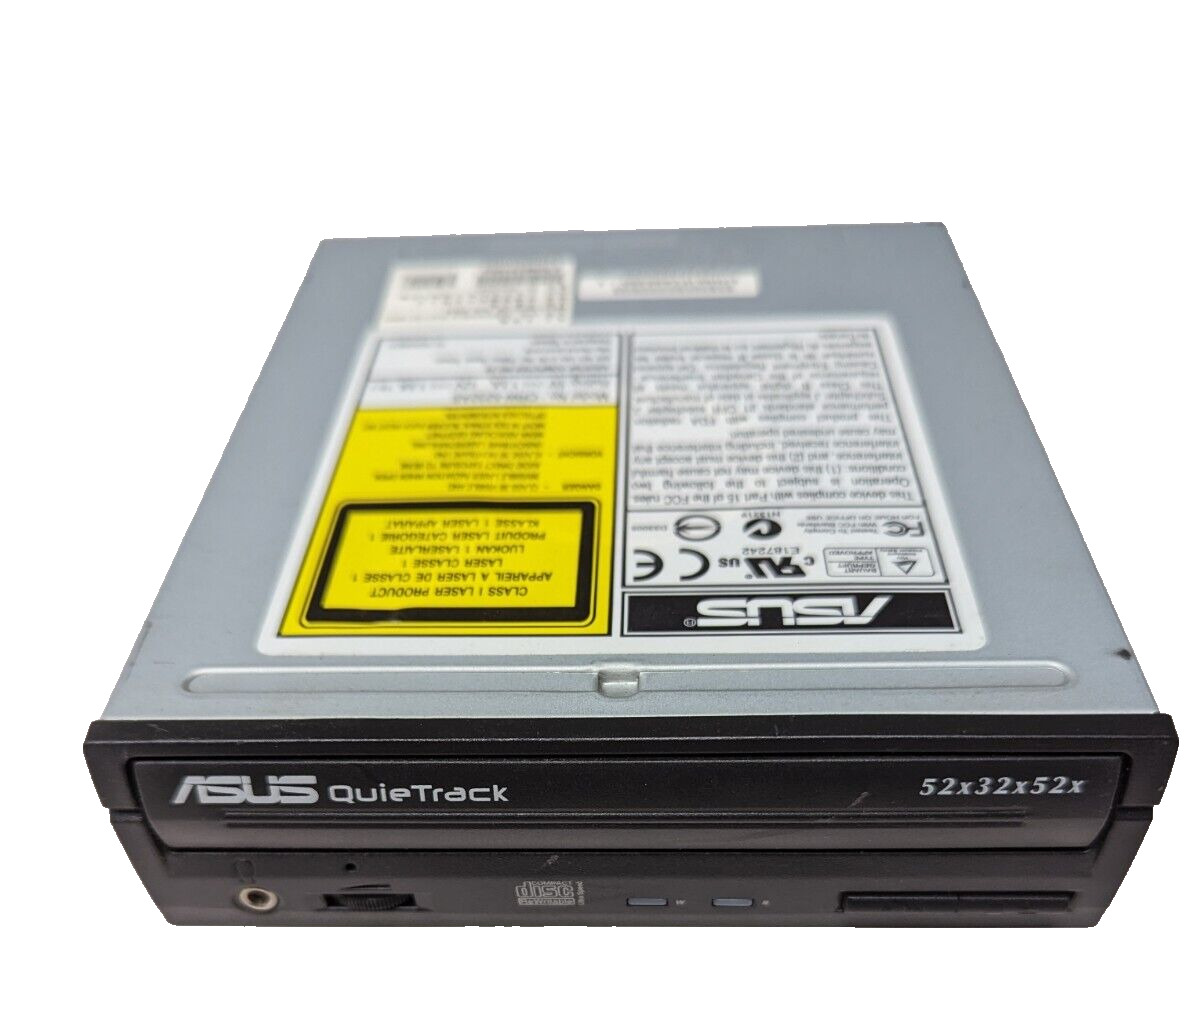 ASUS QuieTrack CD-S5232AS  BLACK 52X ASUS IDE CD ROM nice